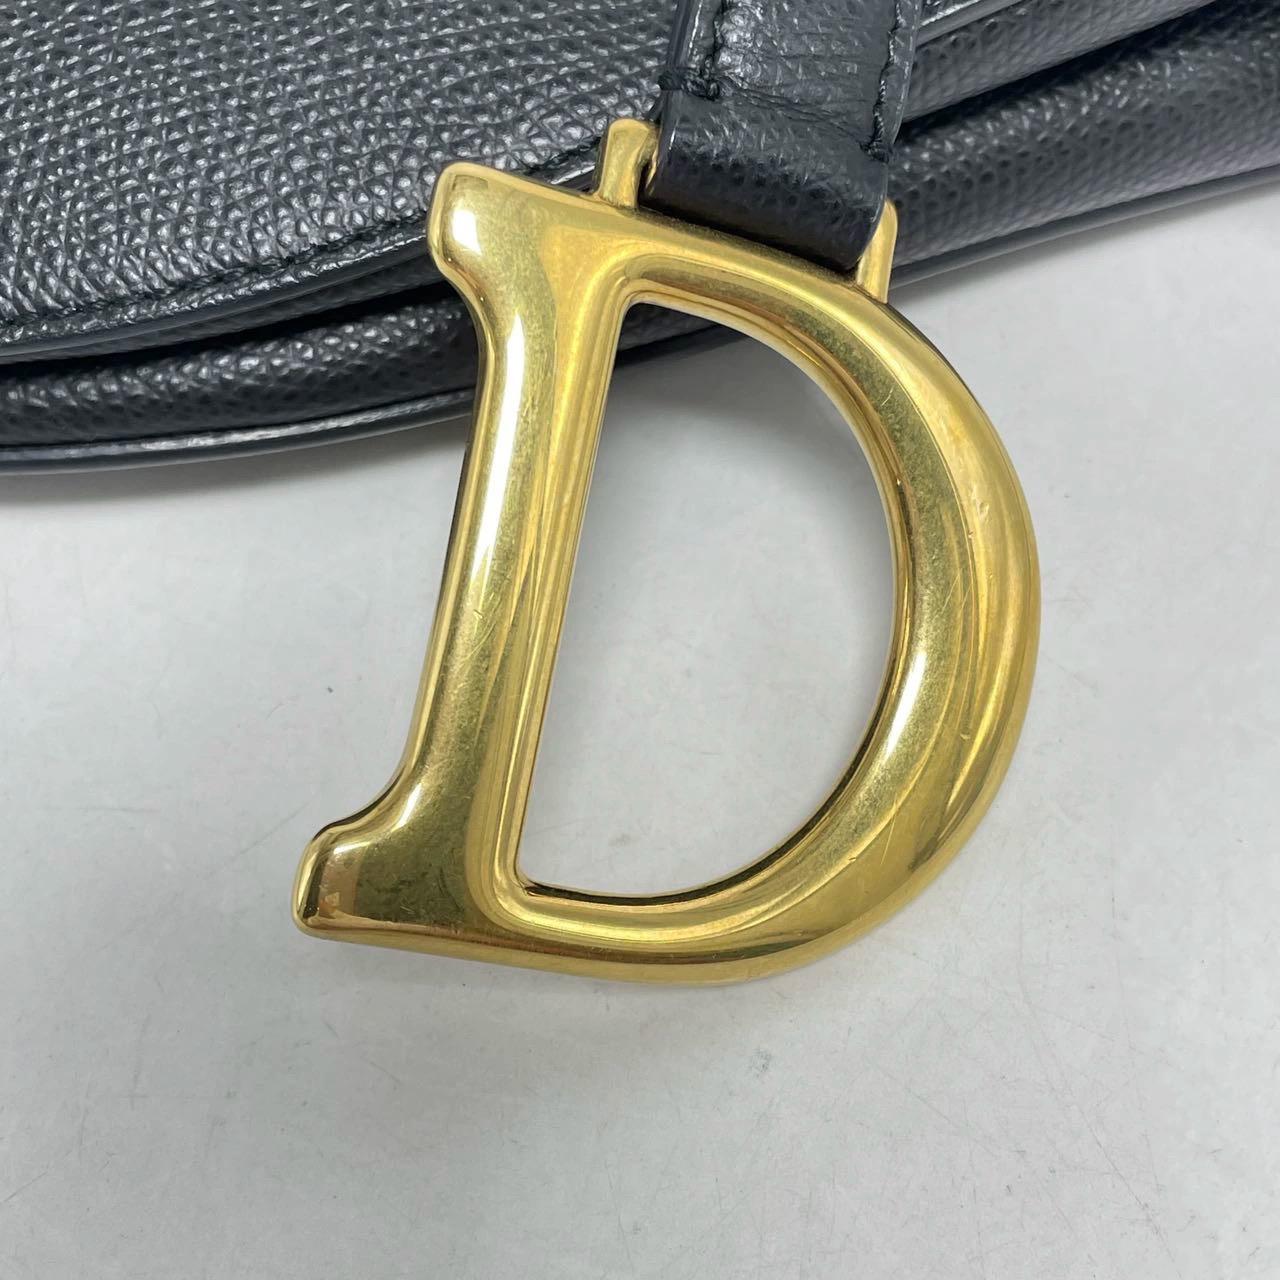 Dior Saddle Black Medium Grained Leather Handbag For Sale 7